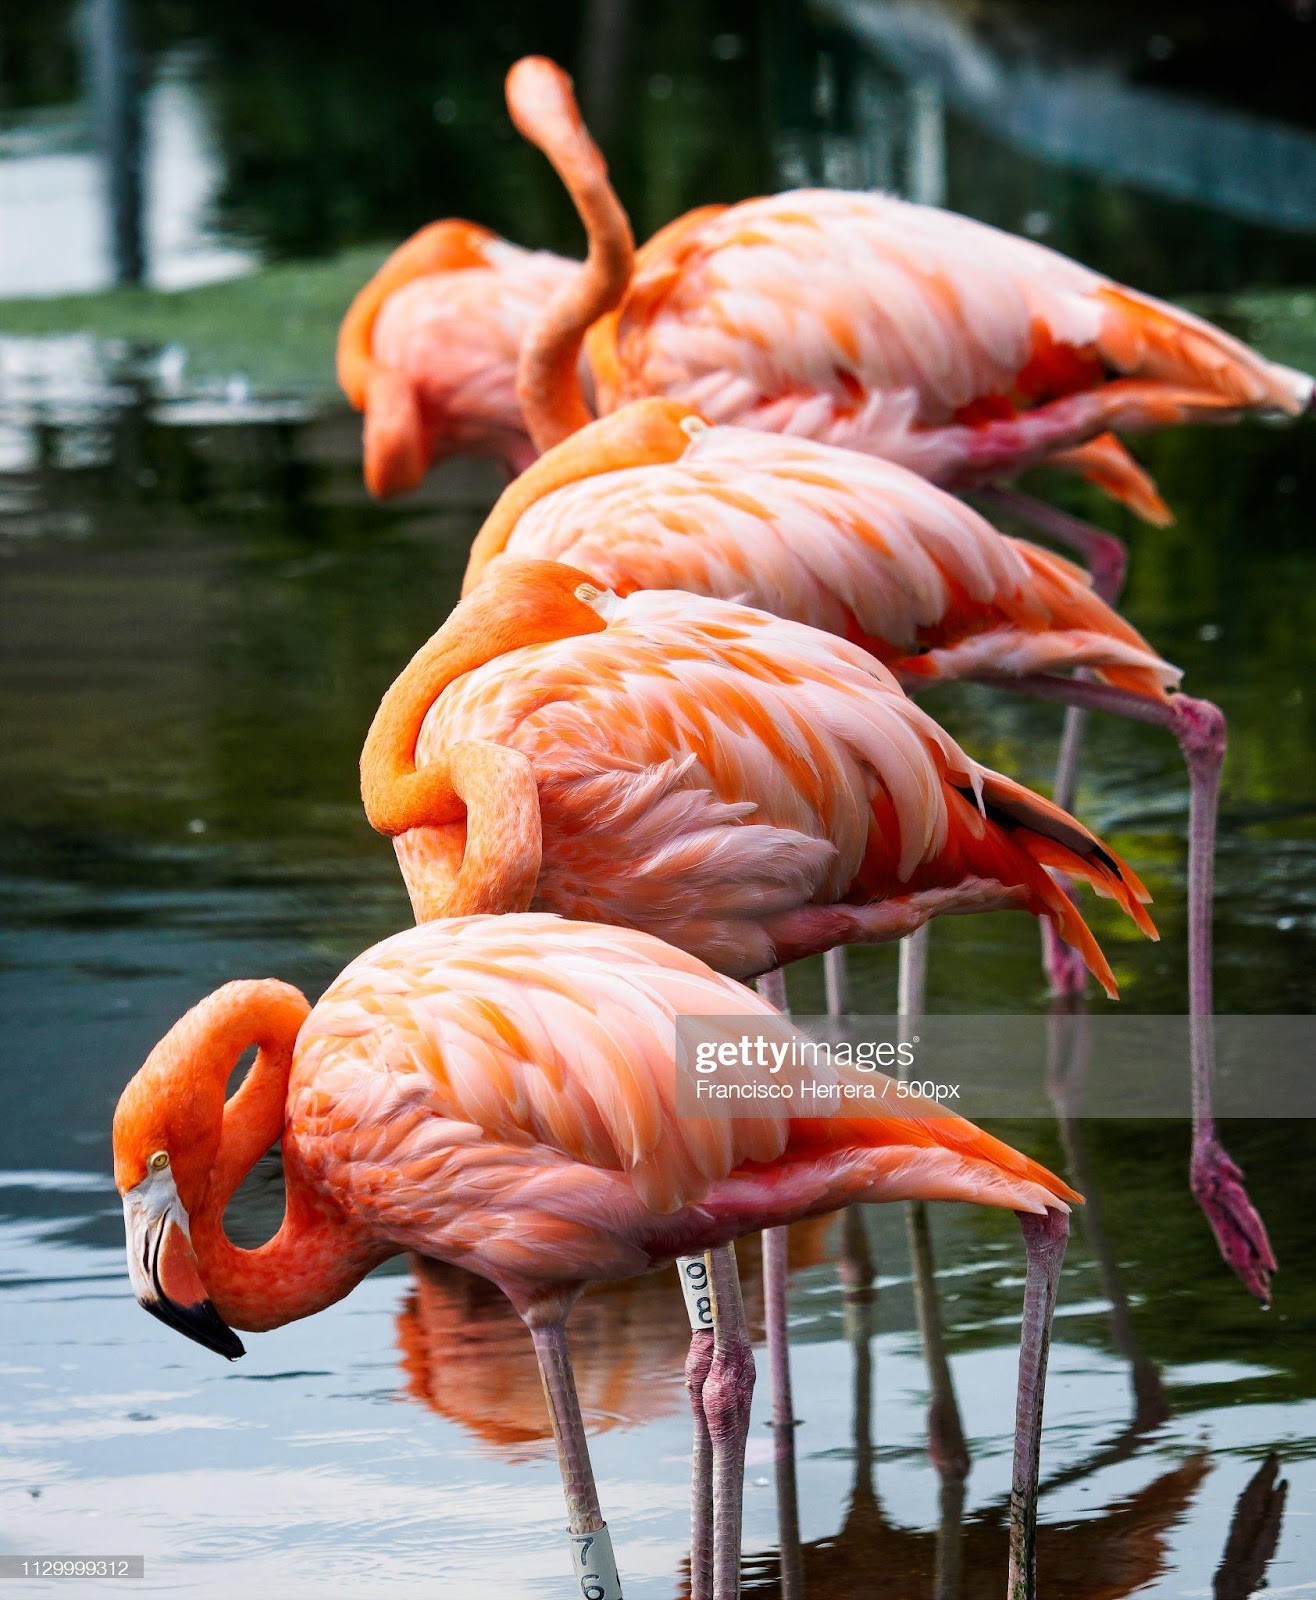 C:\Users\Valerio\Desktop\american-flamingo-phoenicopterus-ruber-picture-id1129999312.jpg